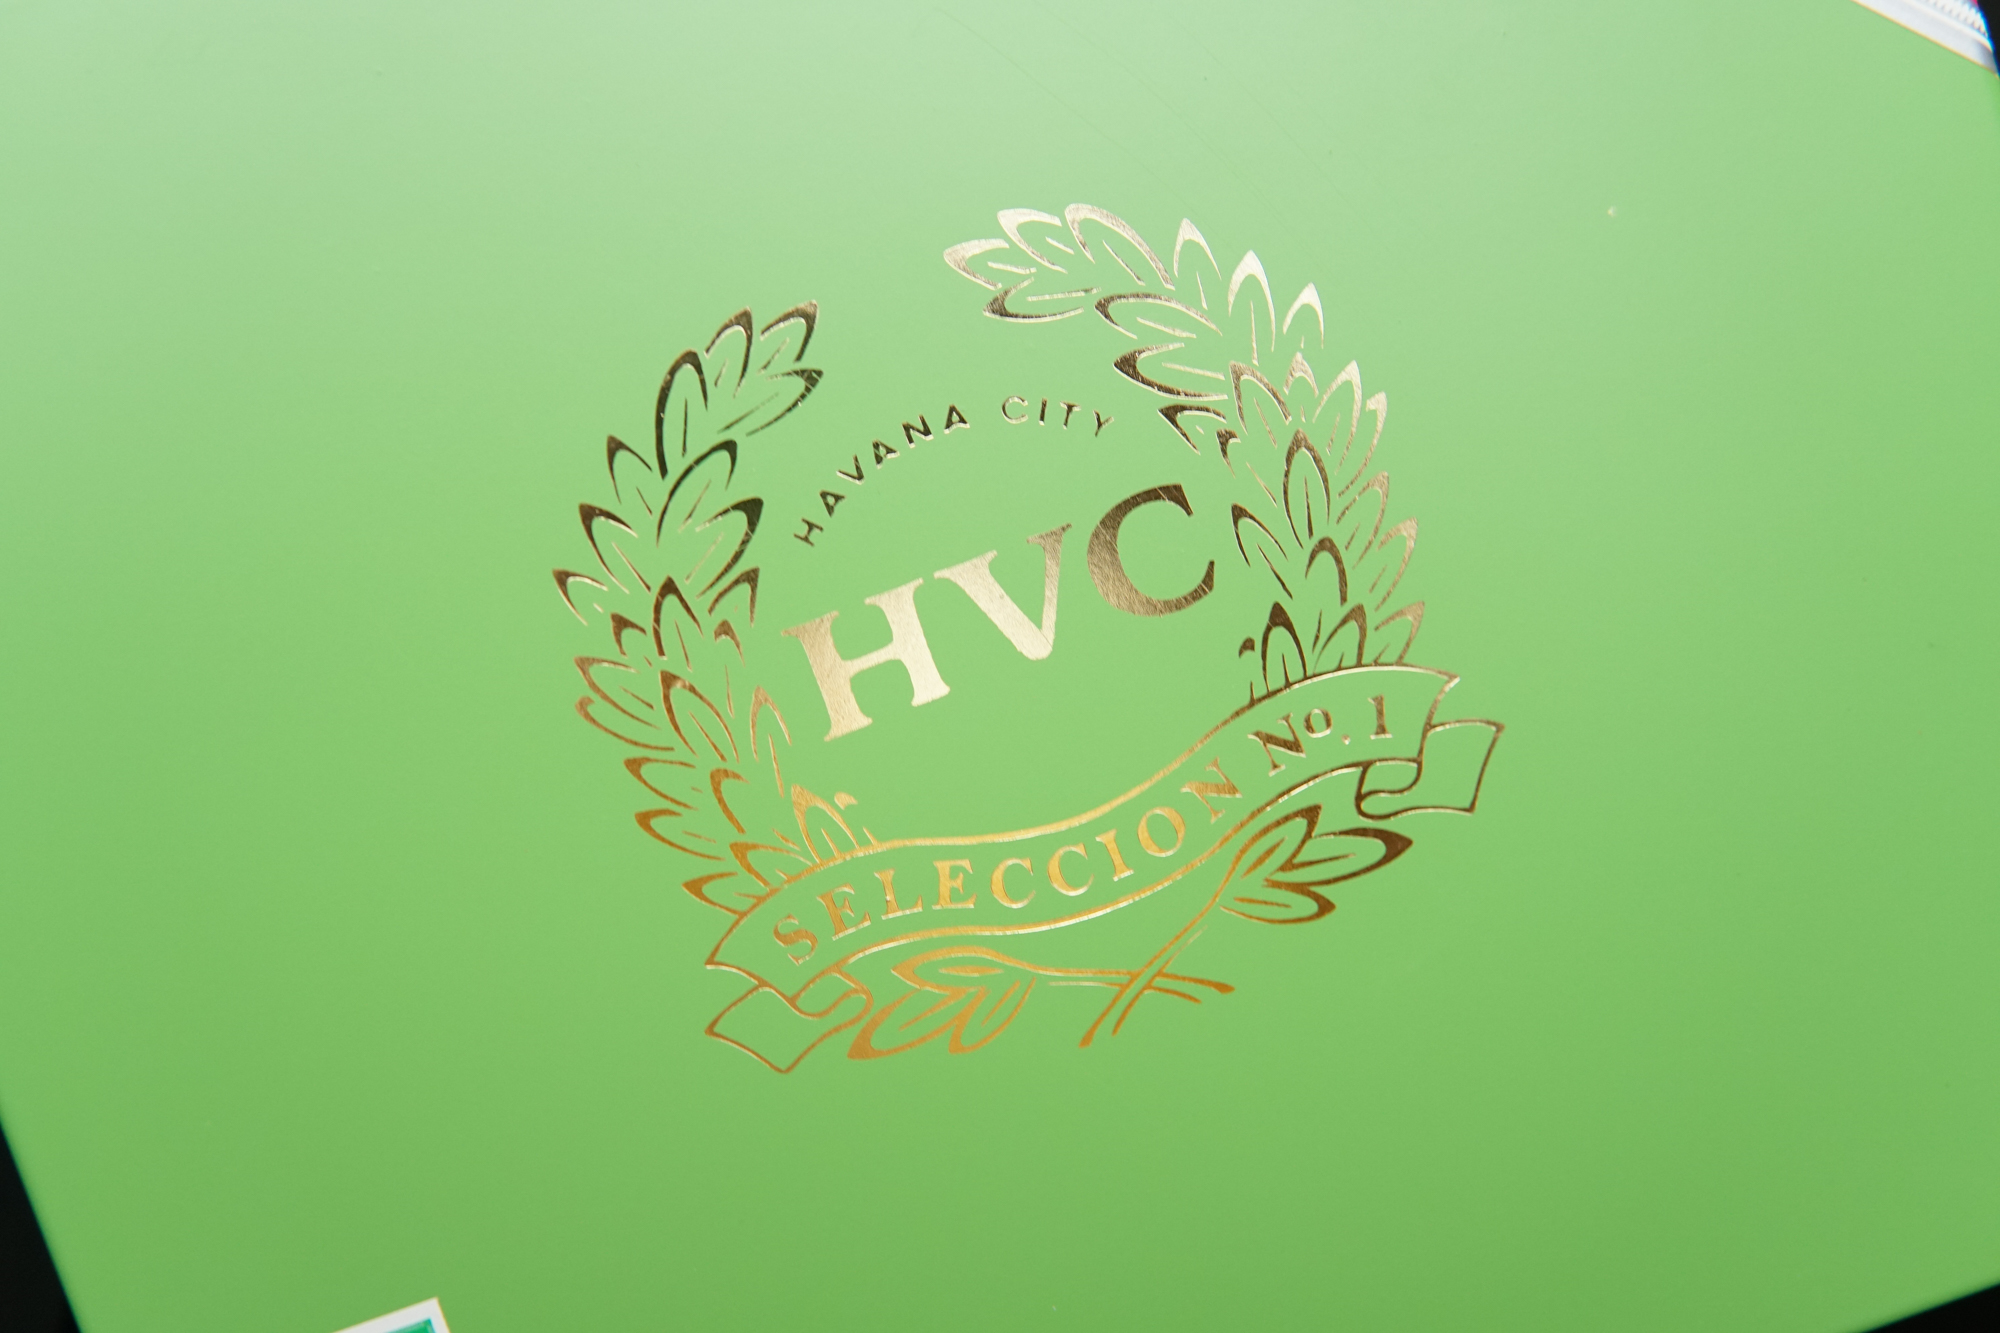 Havana City HVC